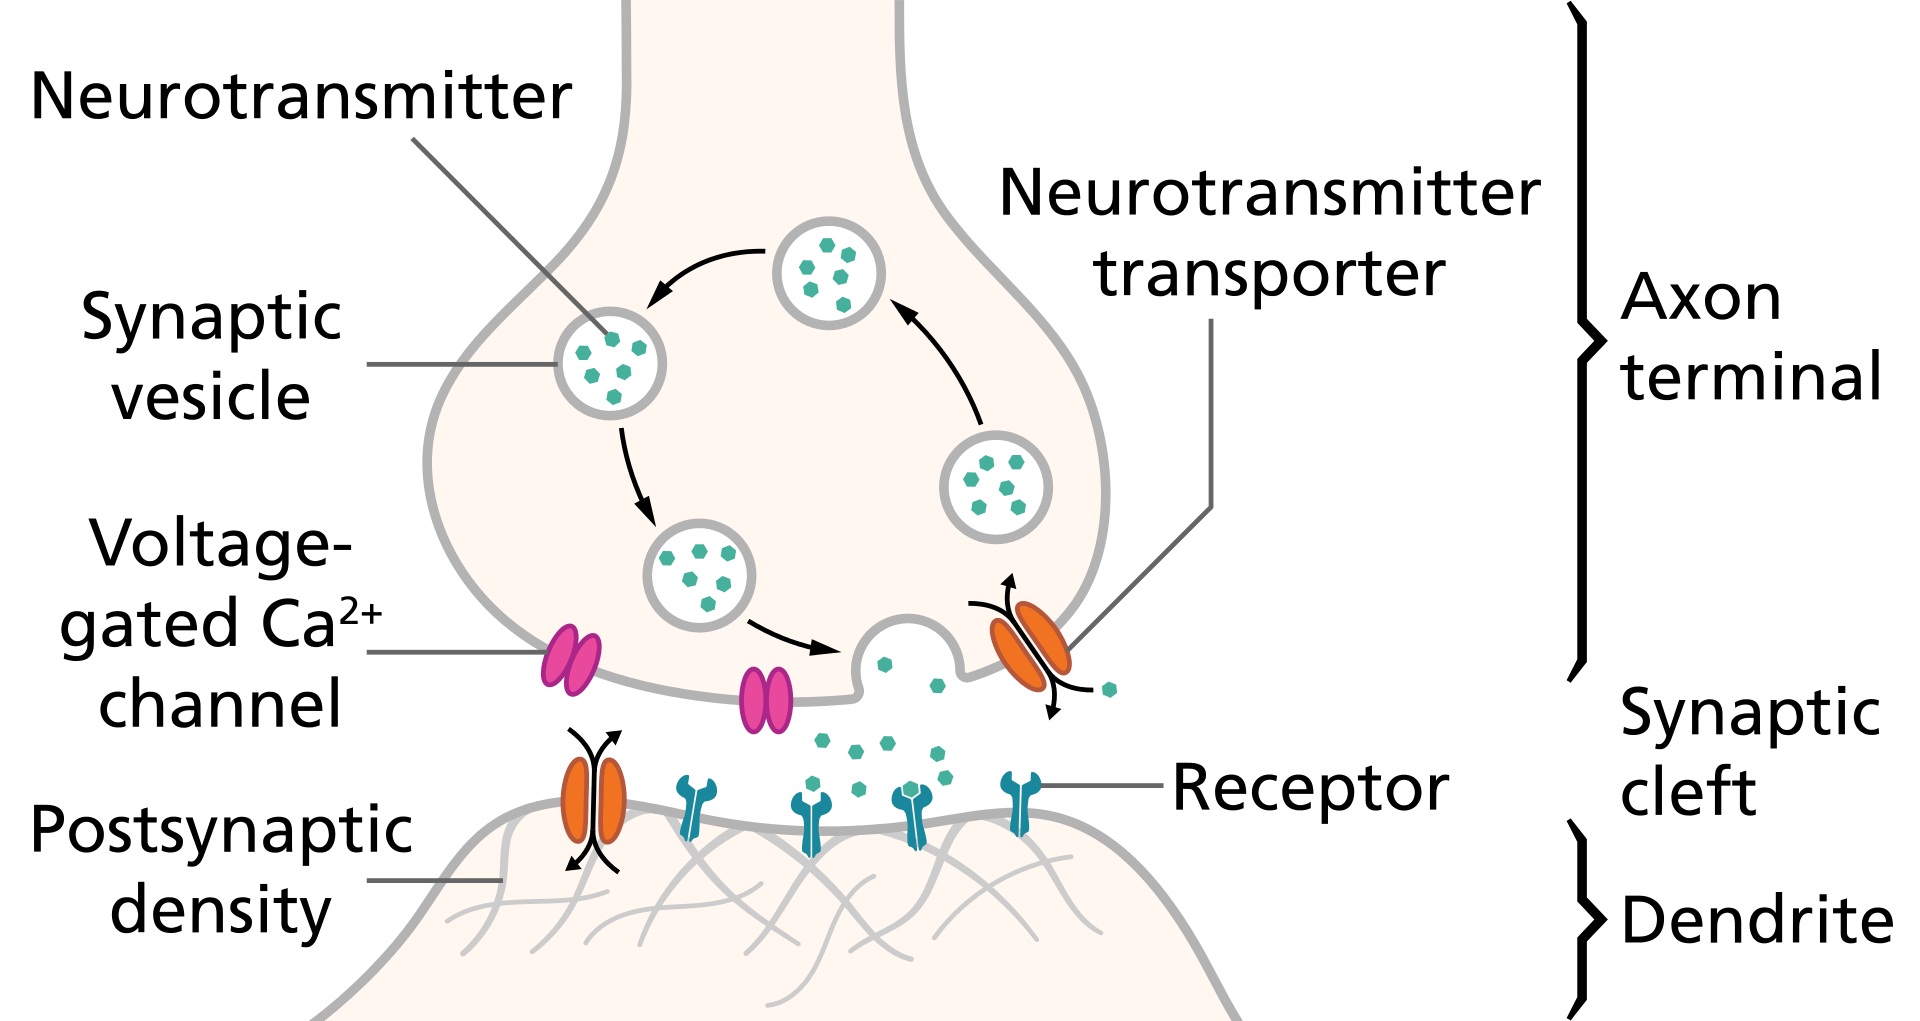 Synapse schematic